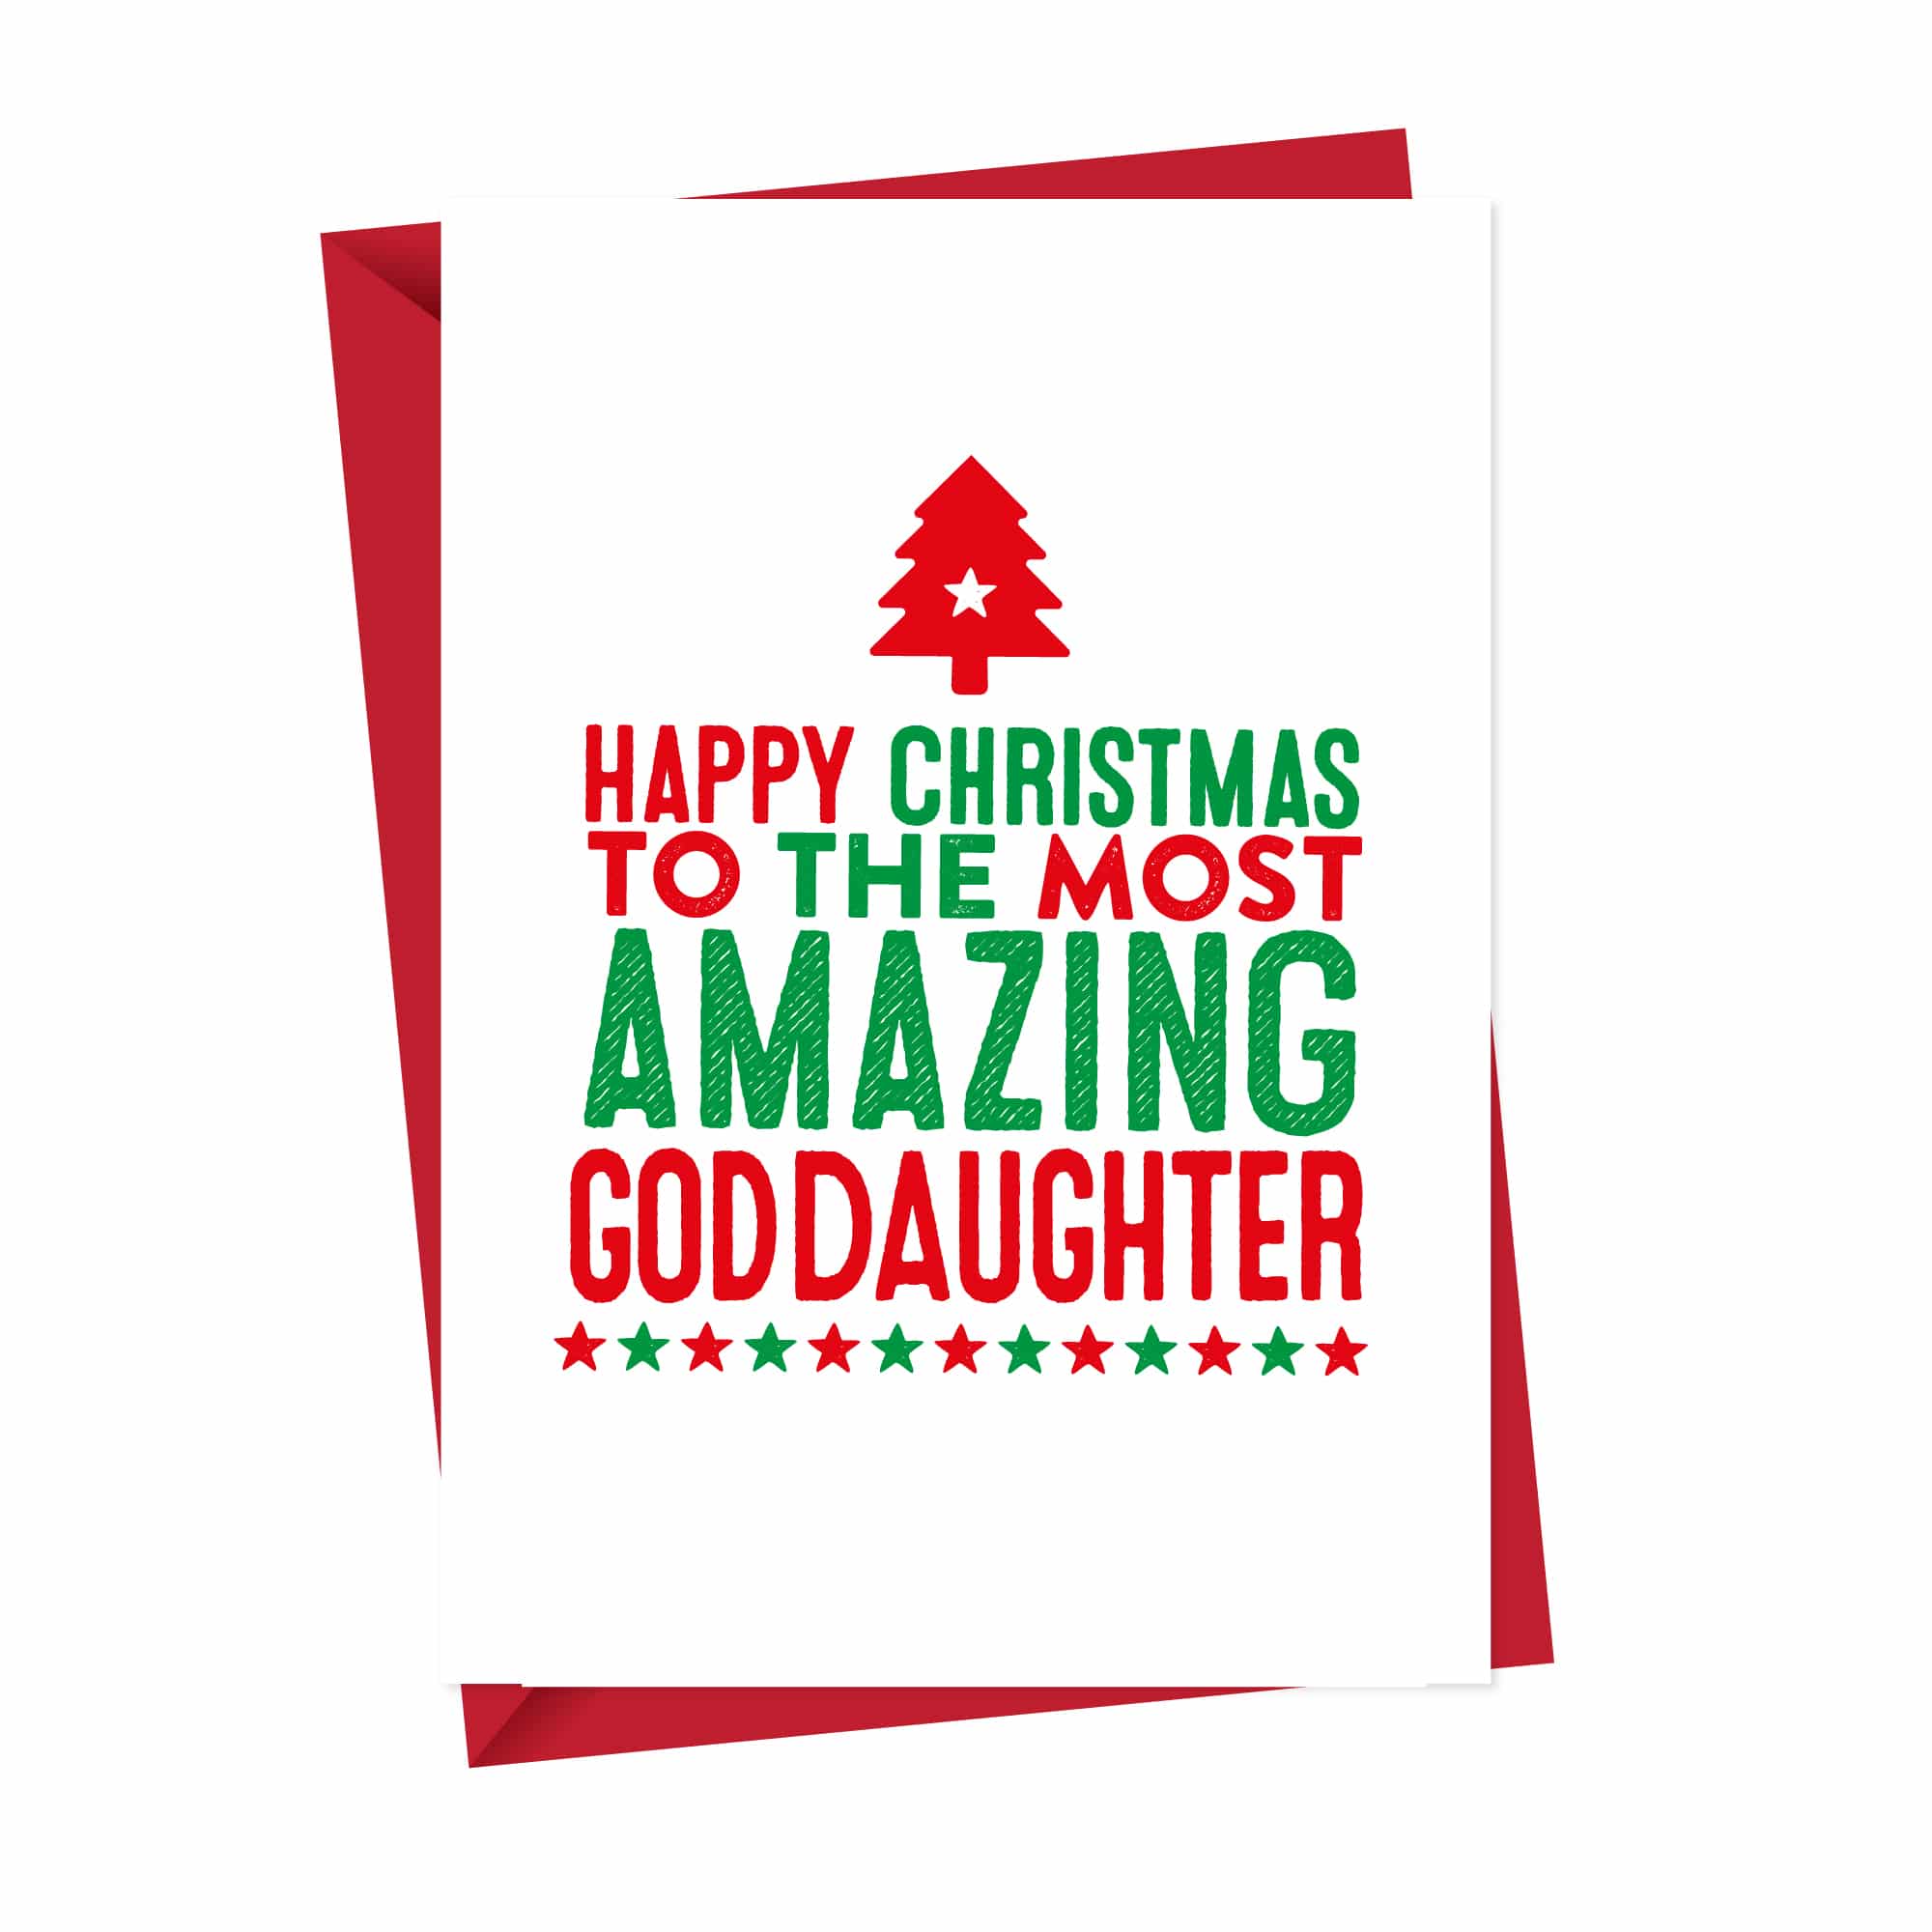 Amazing Goddaughter Christmas Card